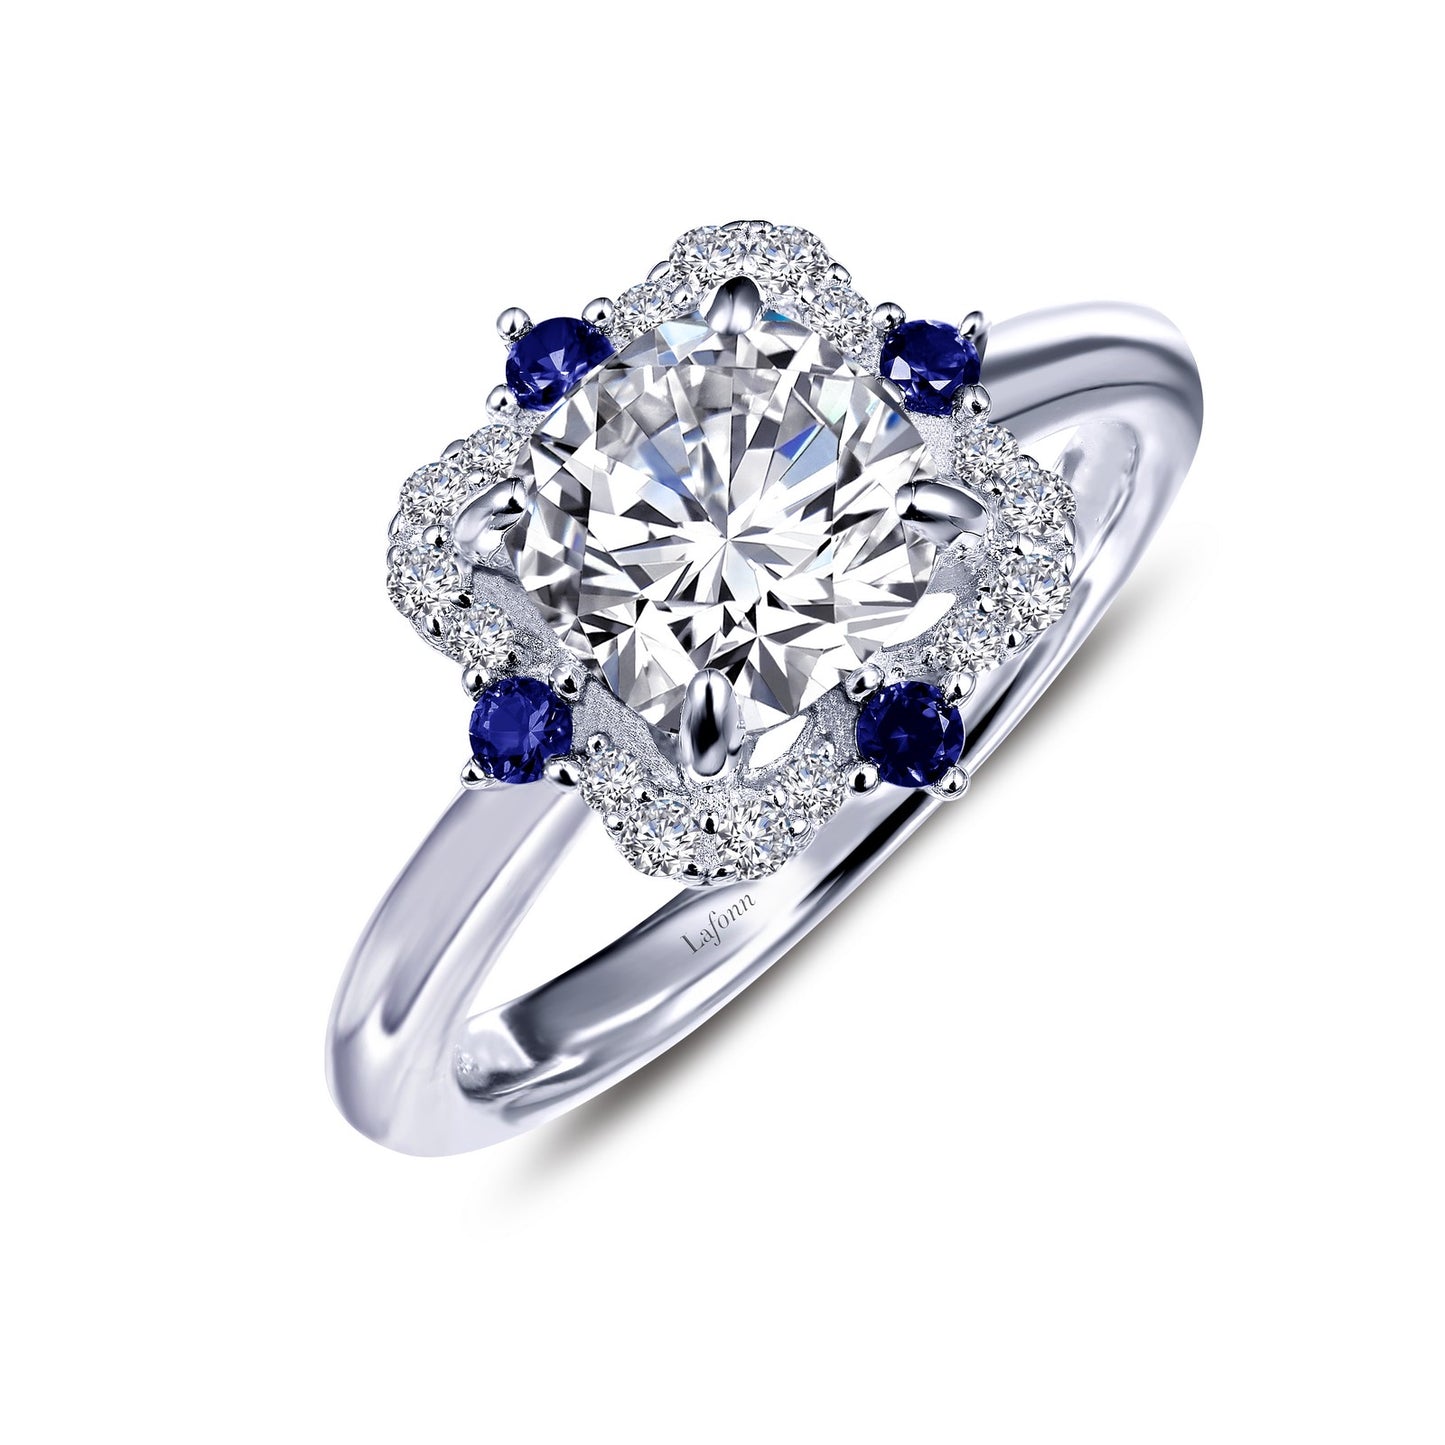 Lafonn Art Deco Inspired Engagement Ring